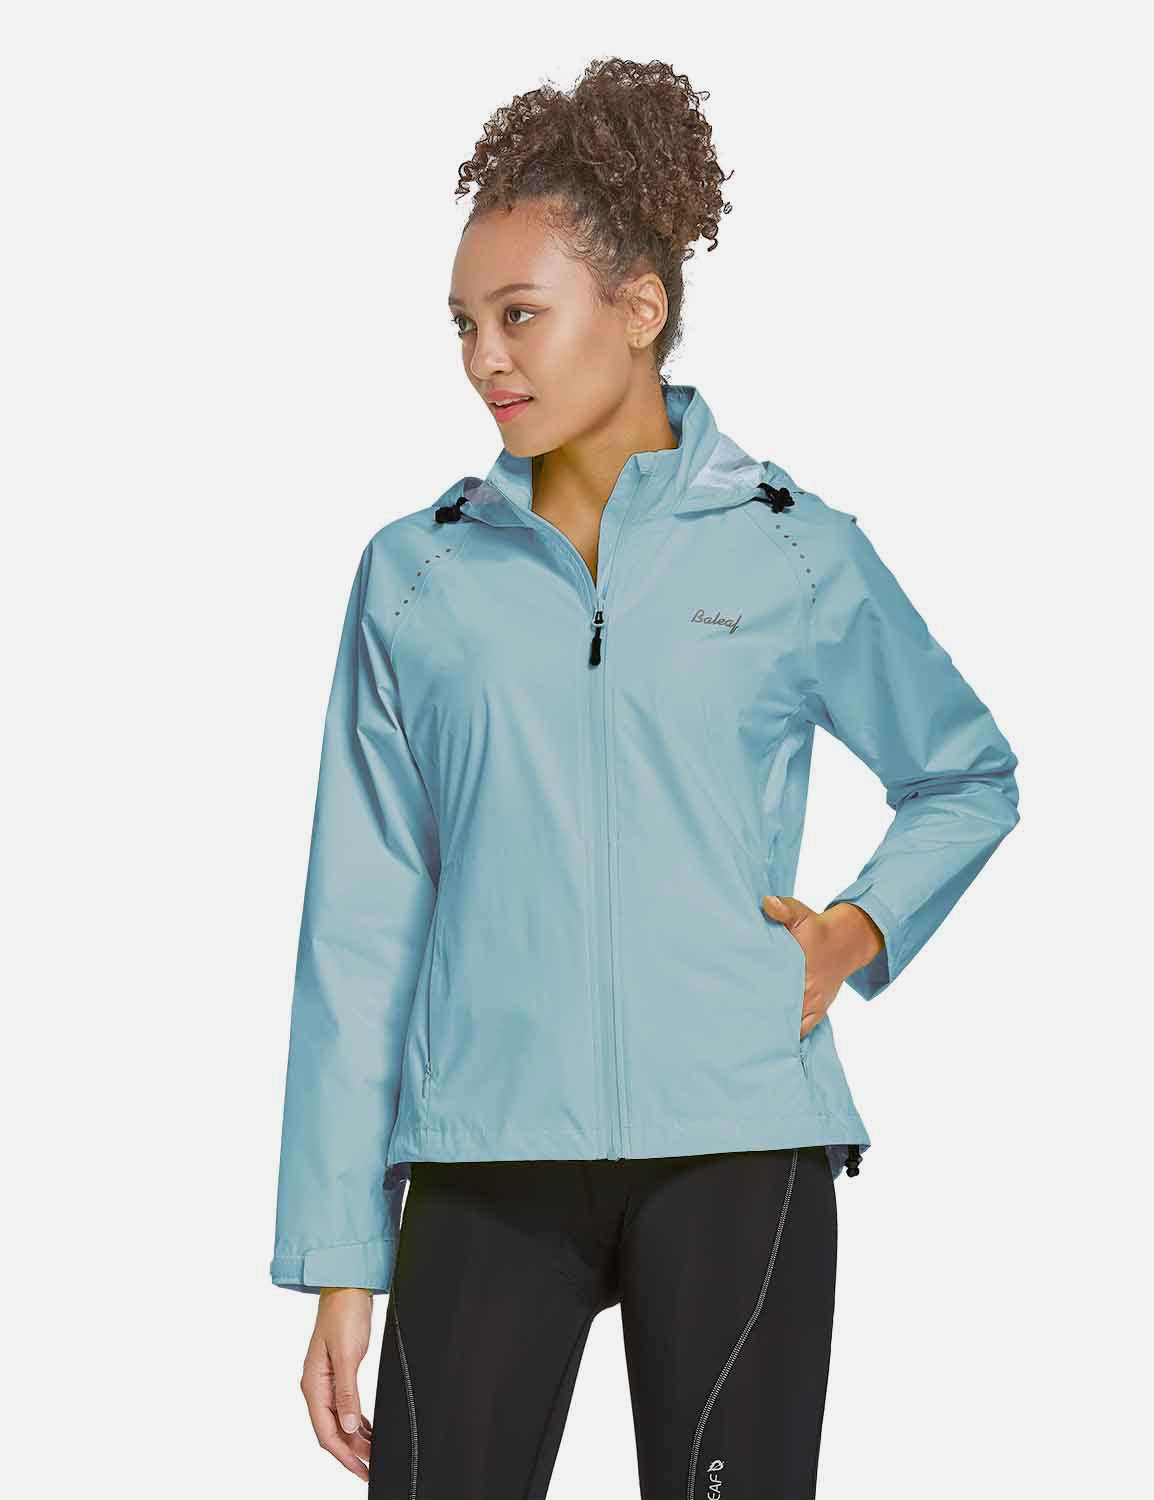 Baleaf Women's Waterproof Lightweight Full-Zip Pocketed Cycling Jacket aaa468 Ethereal Blue Side